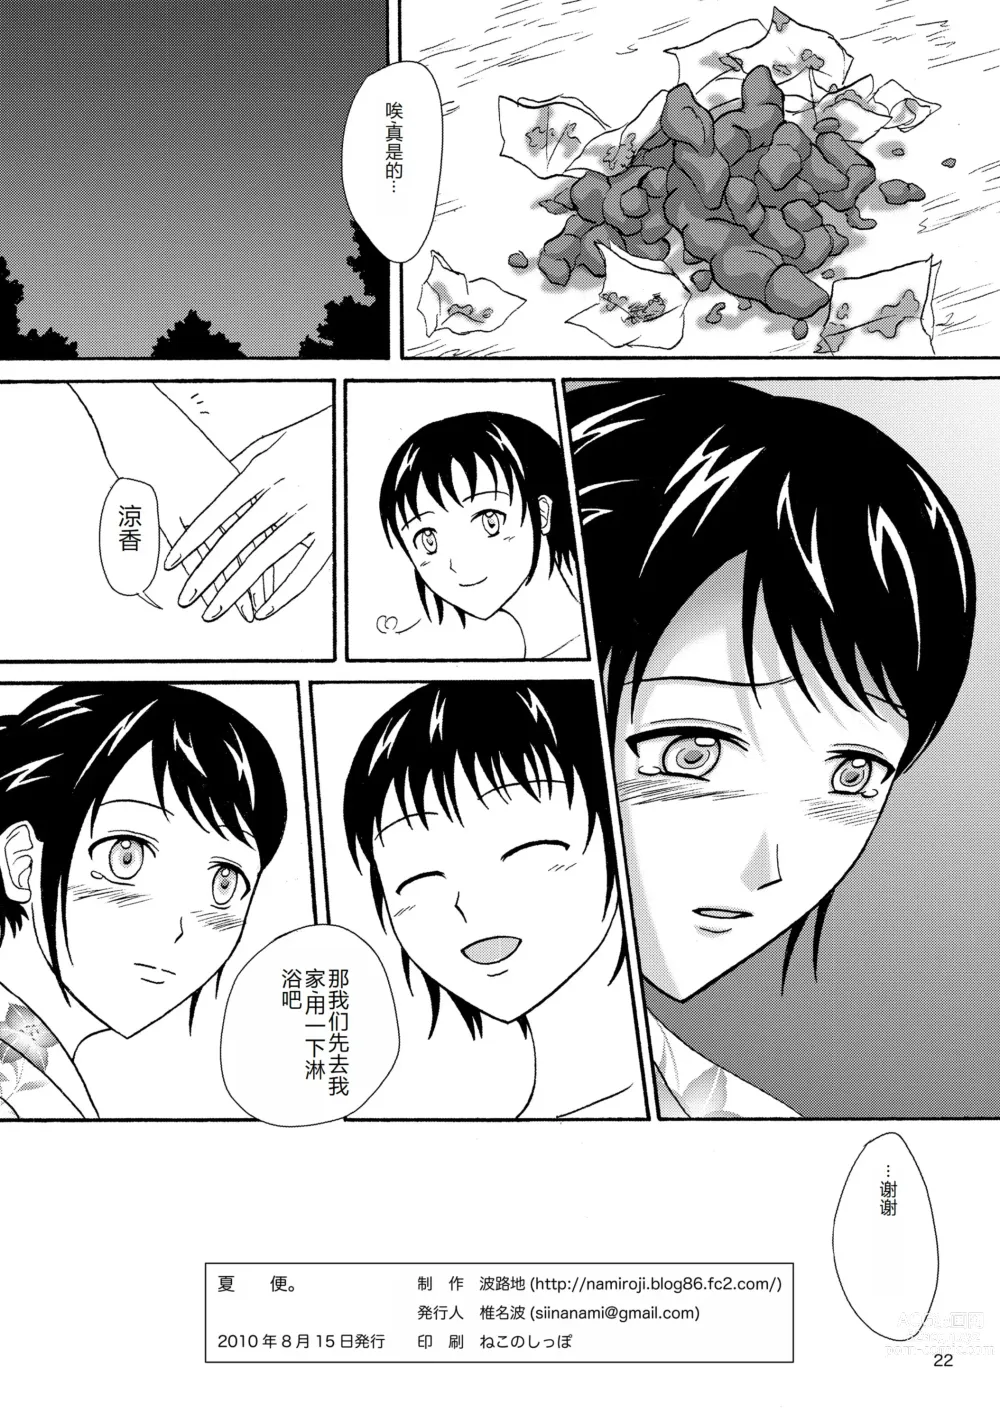 Page 21 of doujinshi Natsuben.